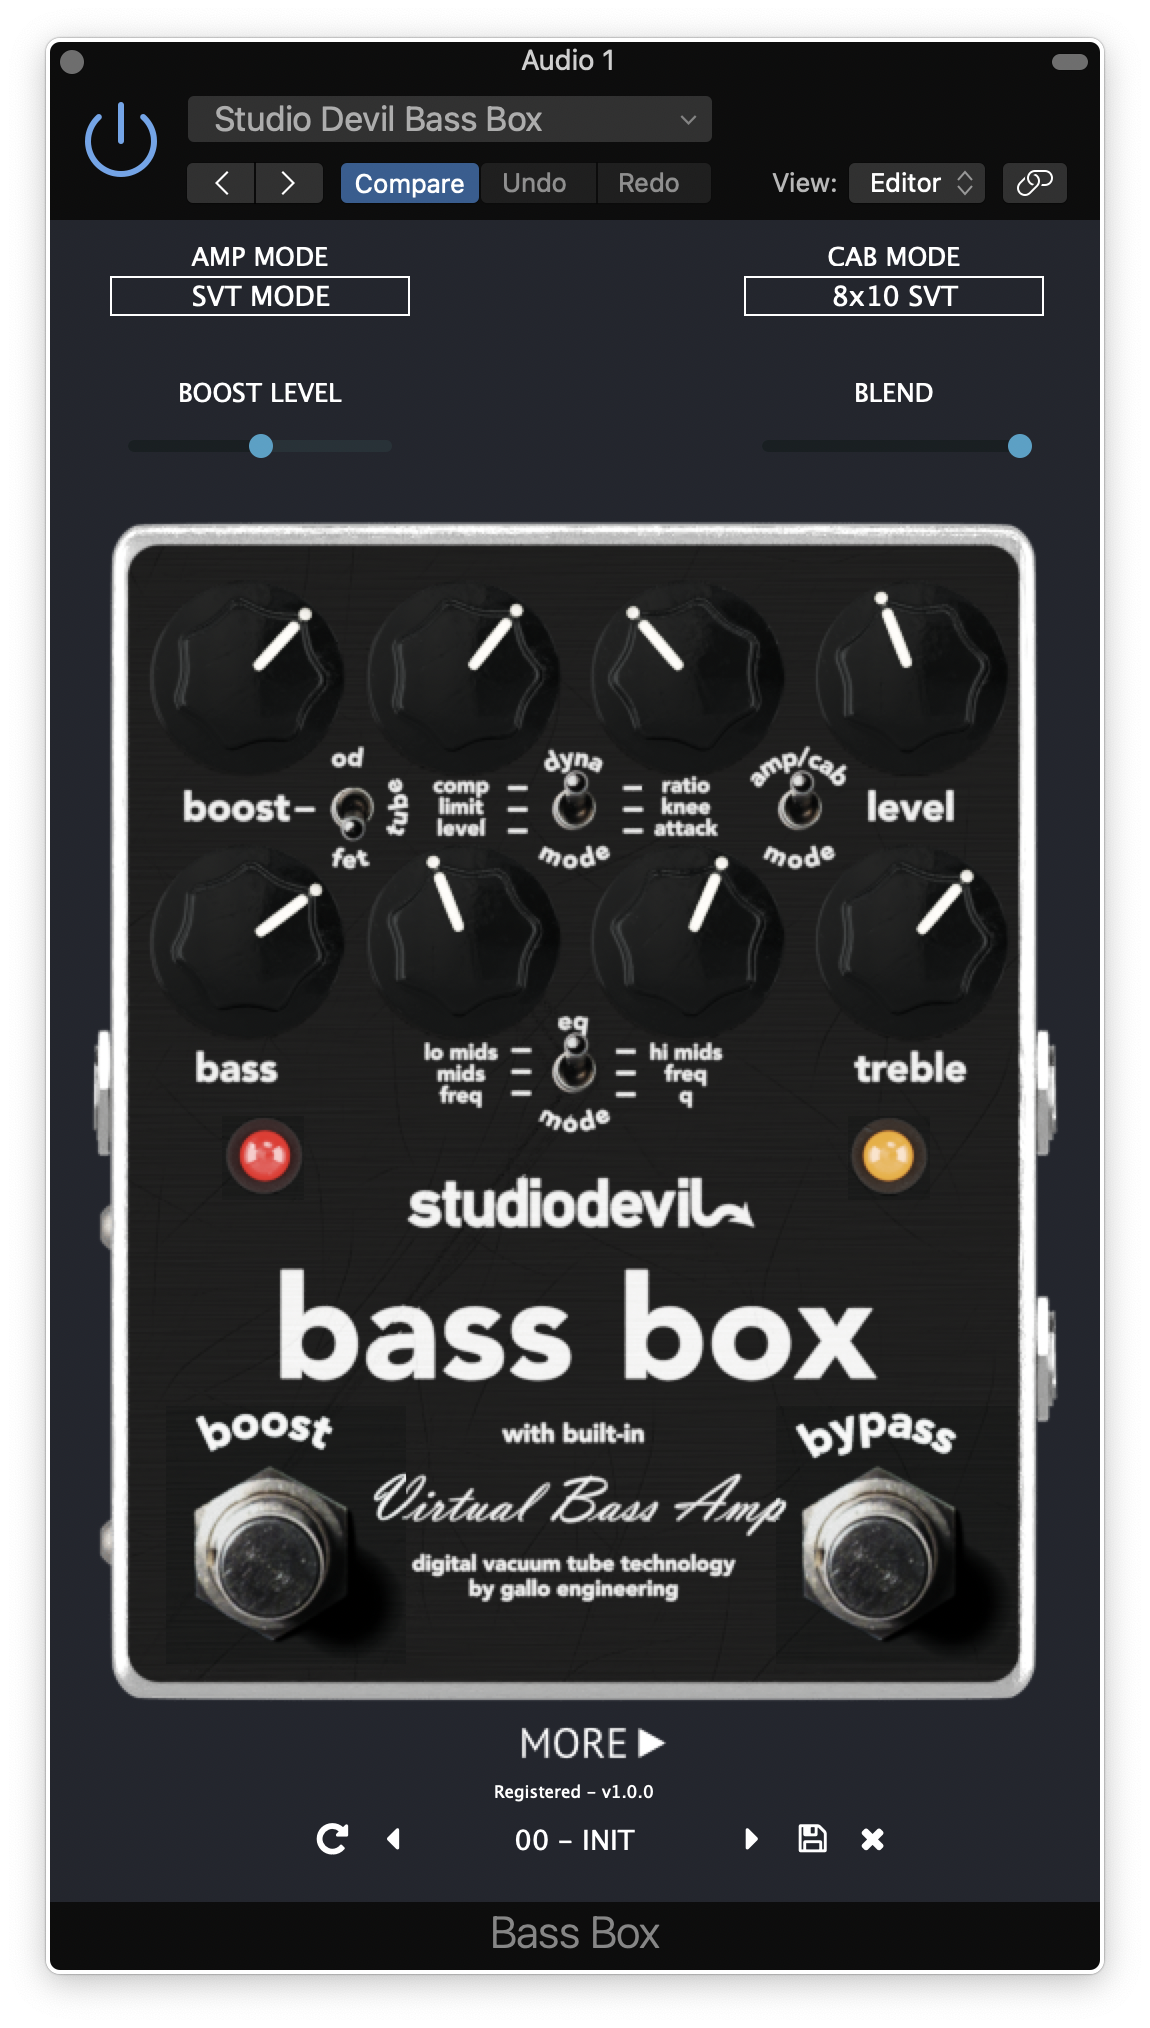 https://studiodevil.com/images/products/bass_box/bass_box_screenshot.png